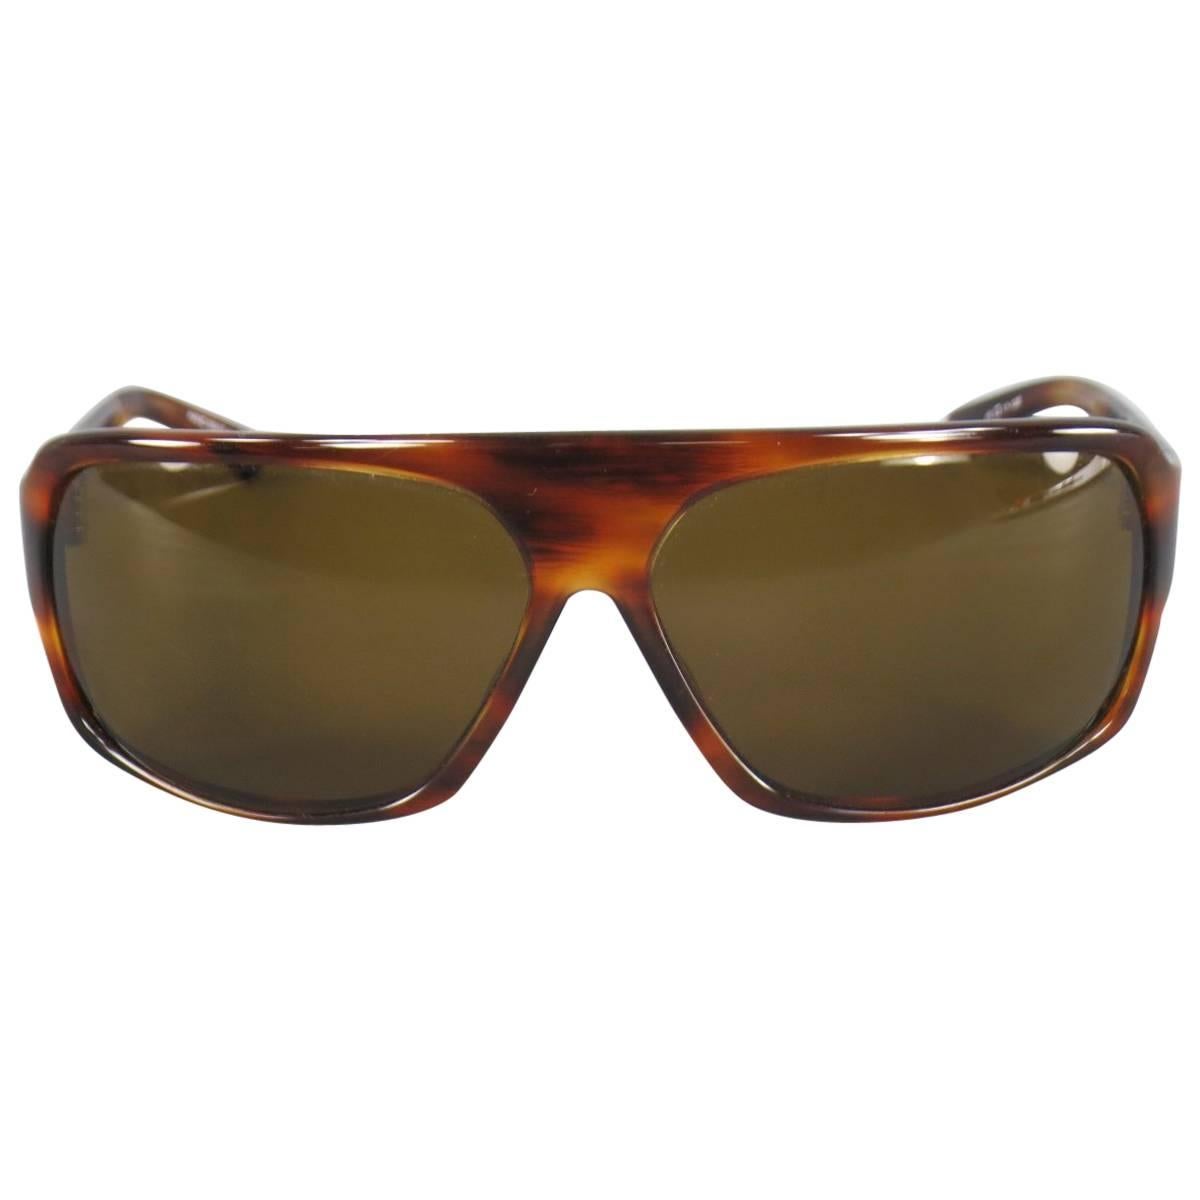 BLINDE Brown Tortoise Shell Acetate Flat Top Sunglasses